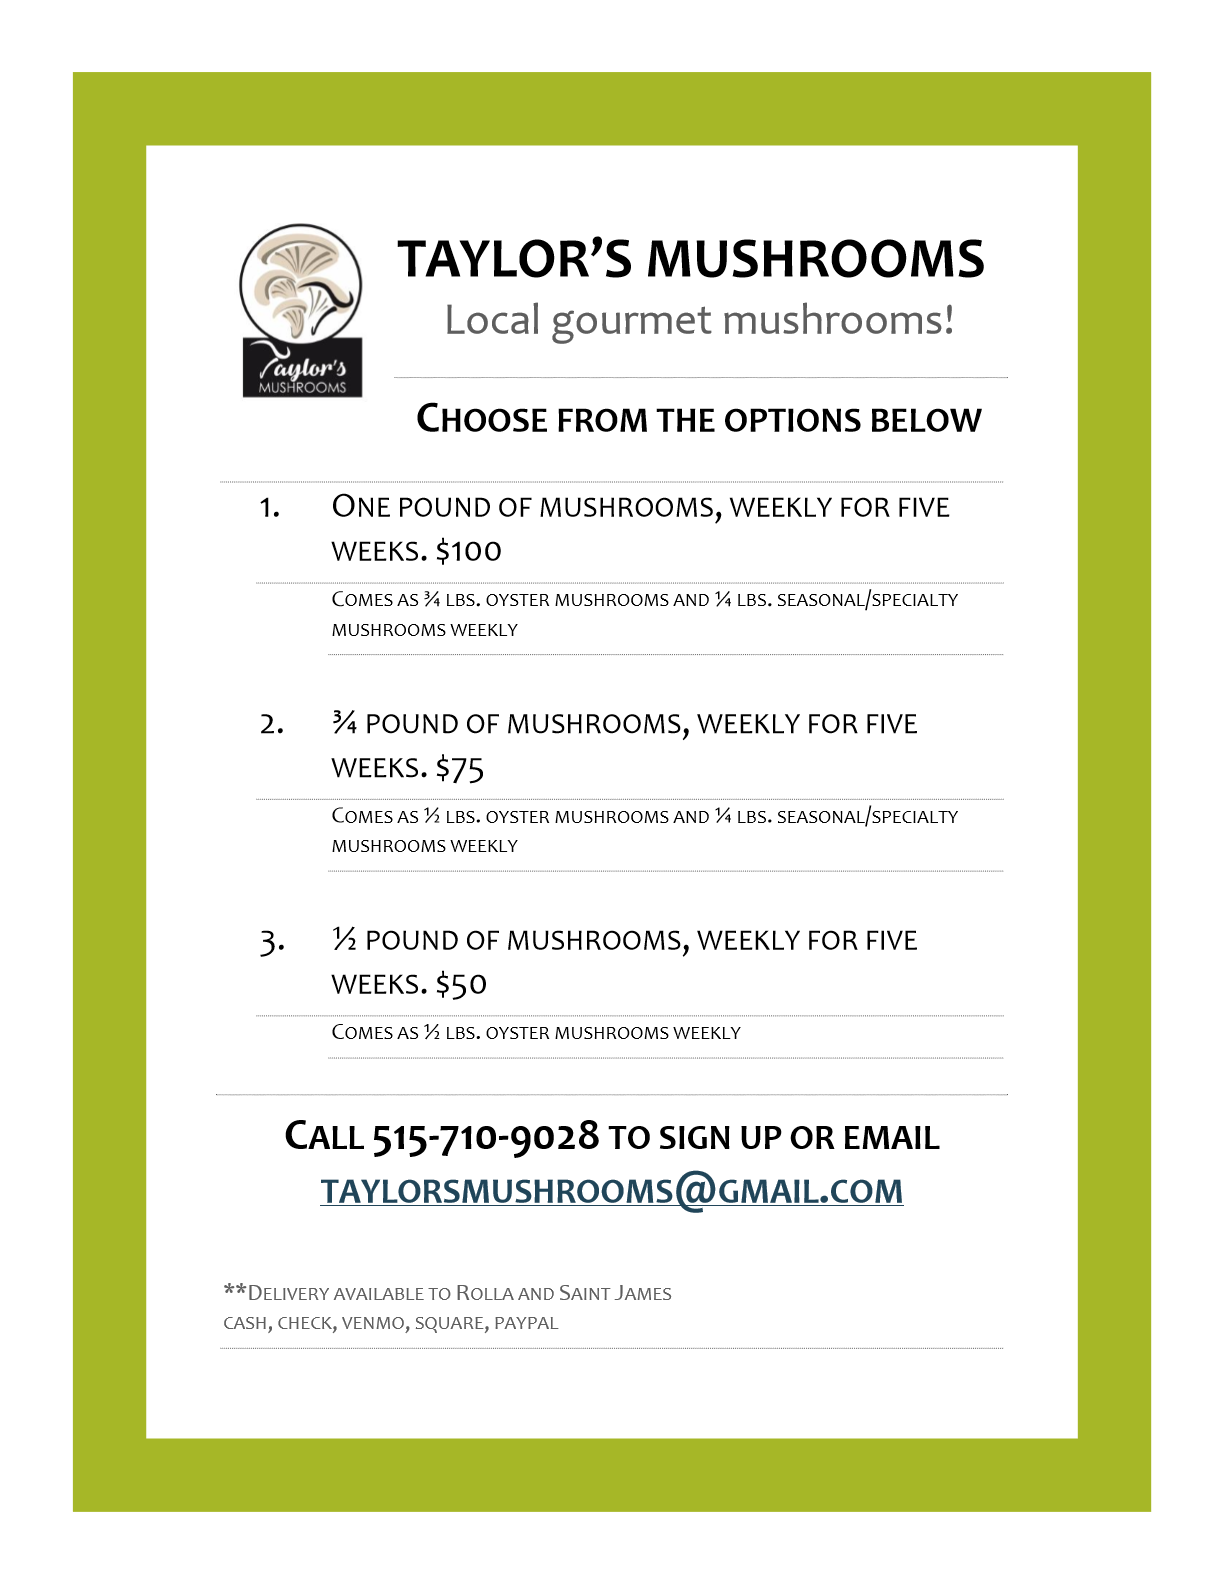 Mushroom Delivery - Option 2